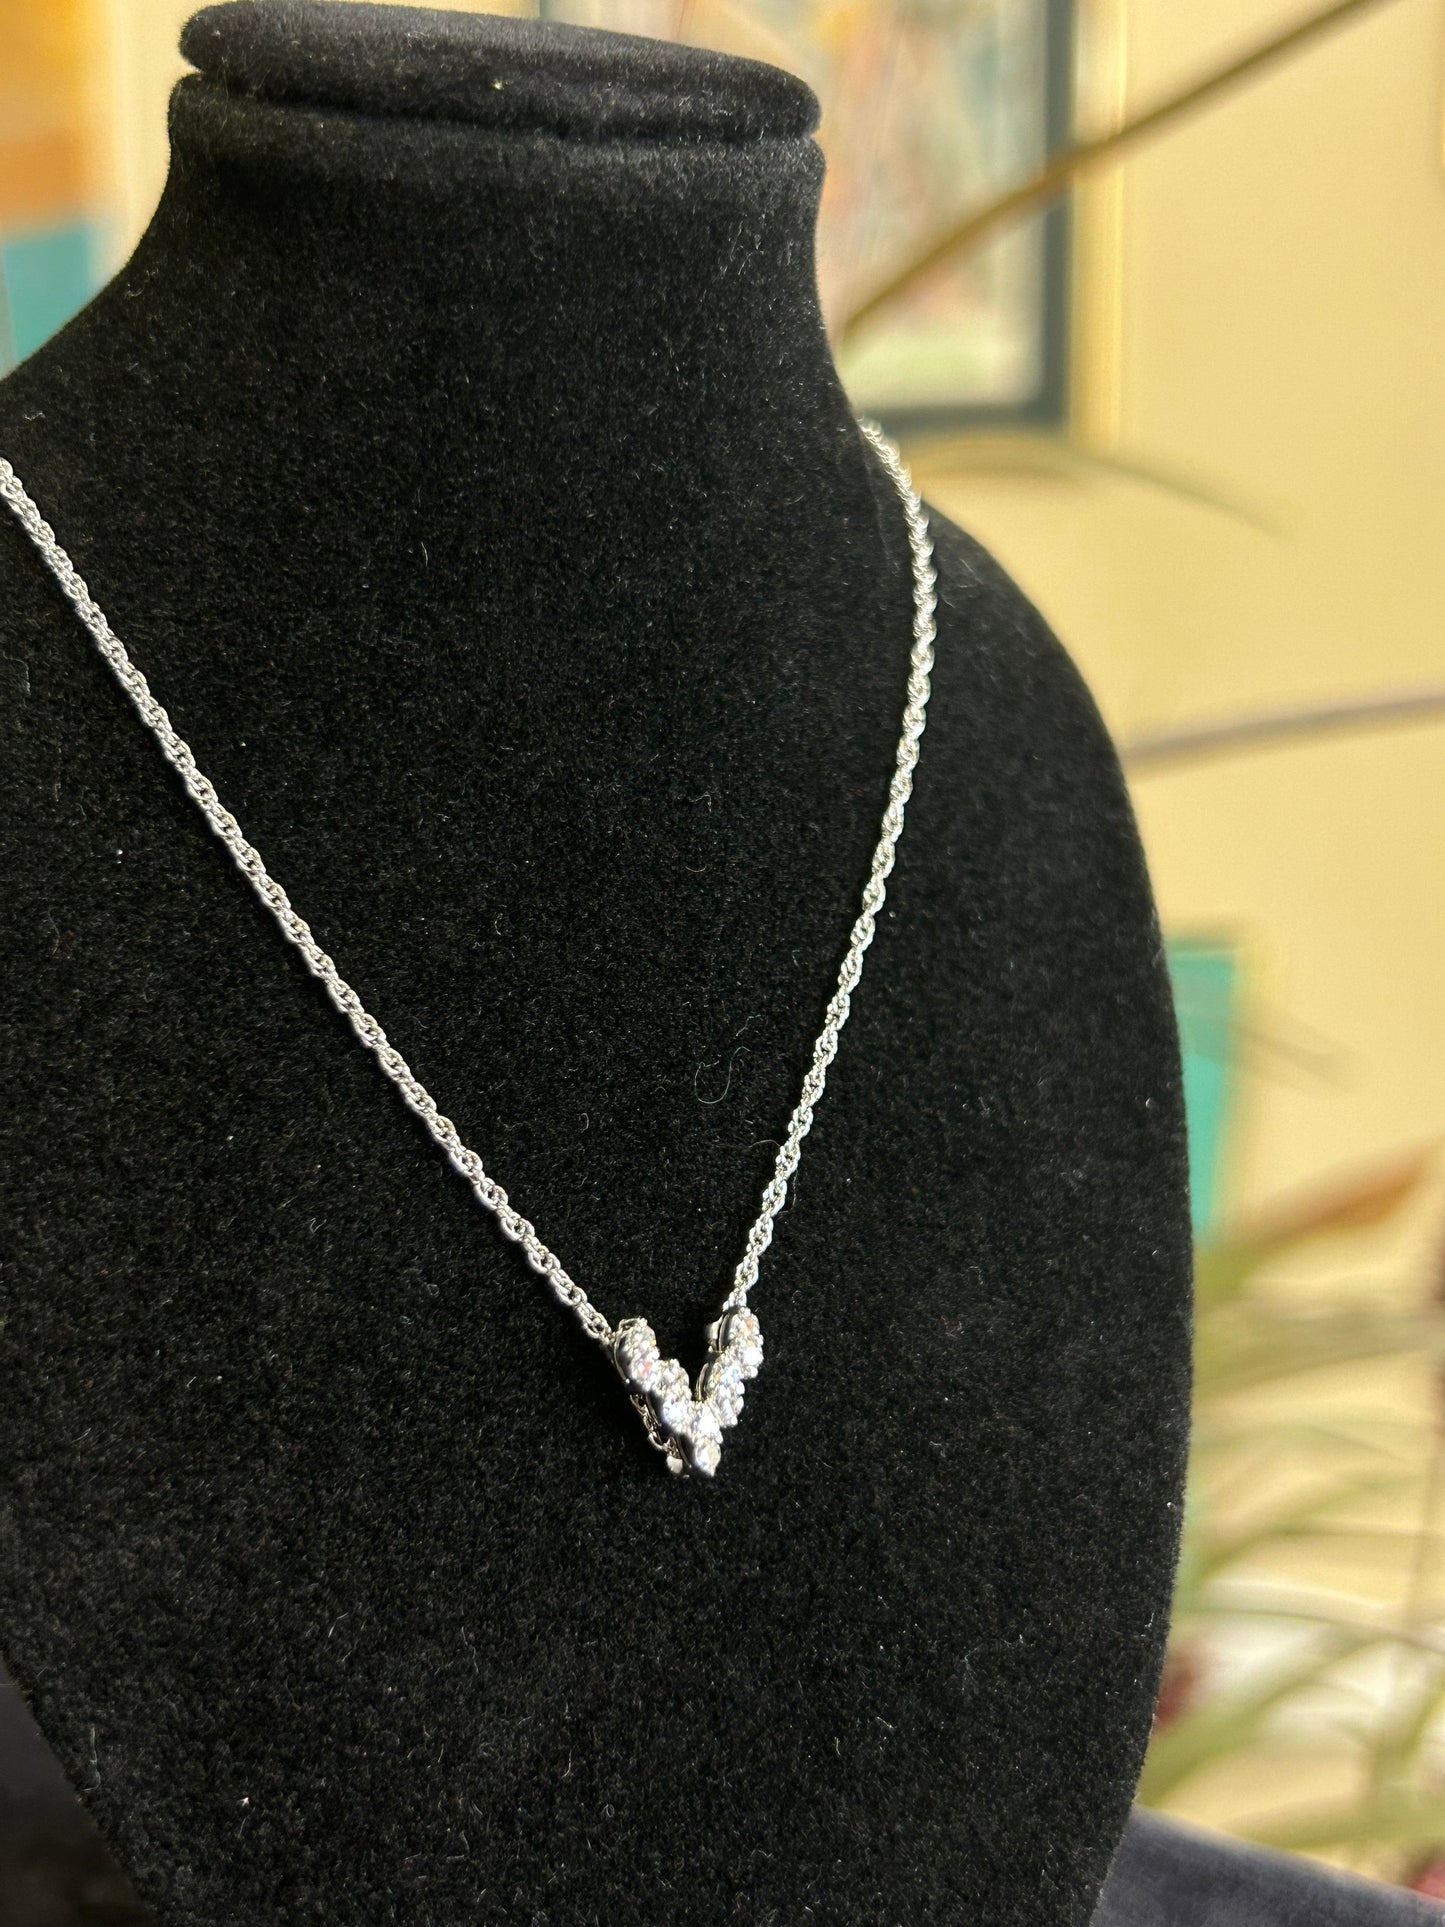 White Gold Five Diamond Pendant Woman's Necklace